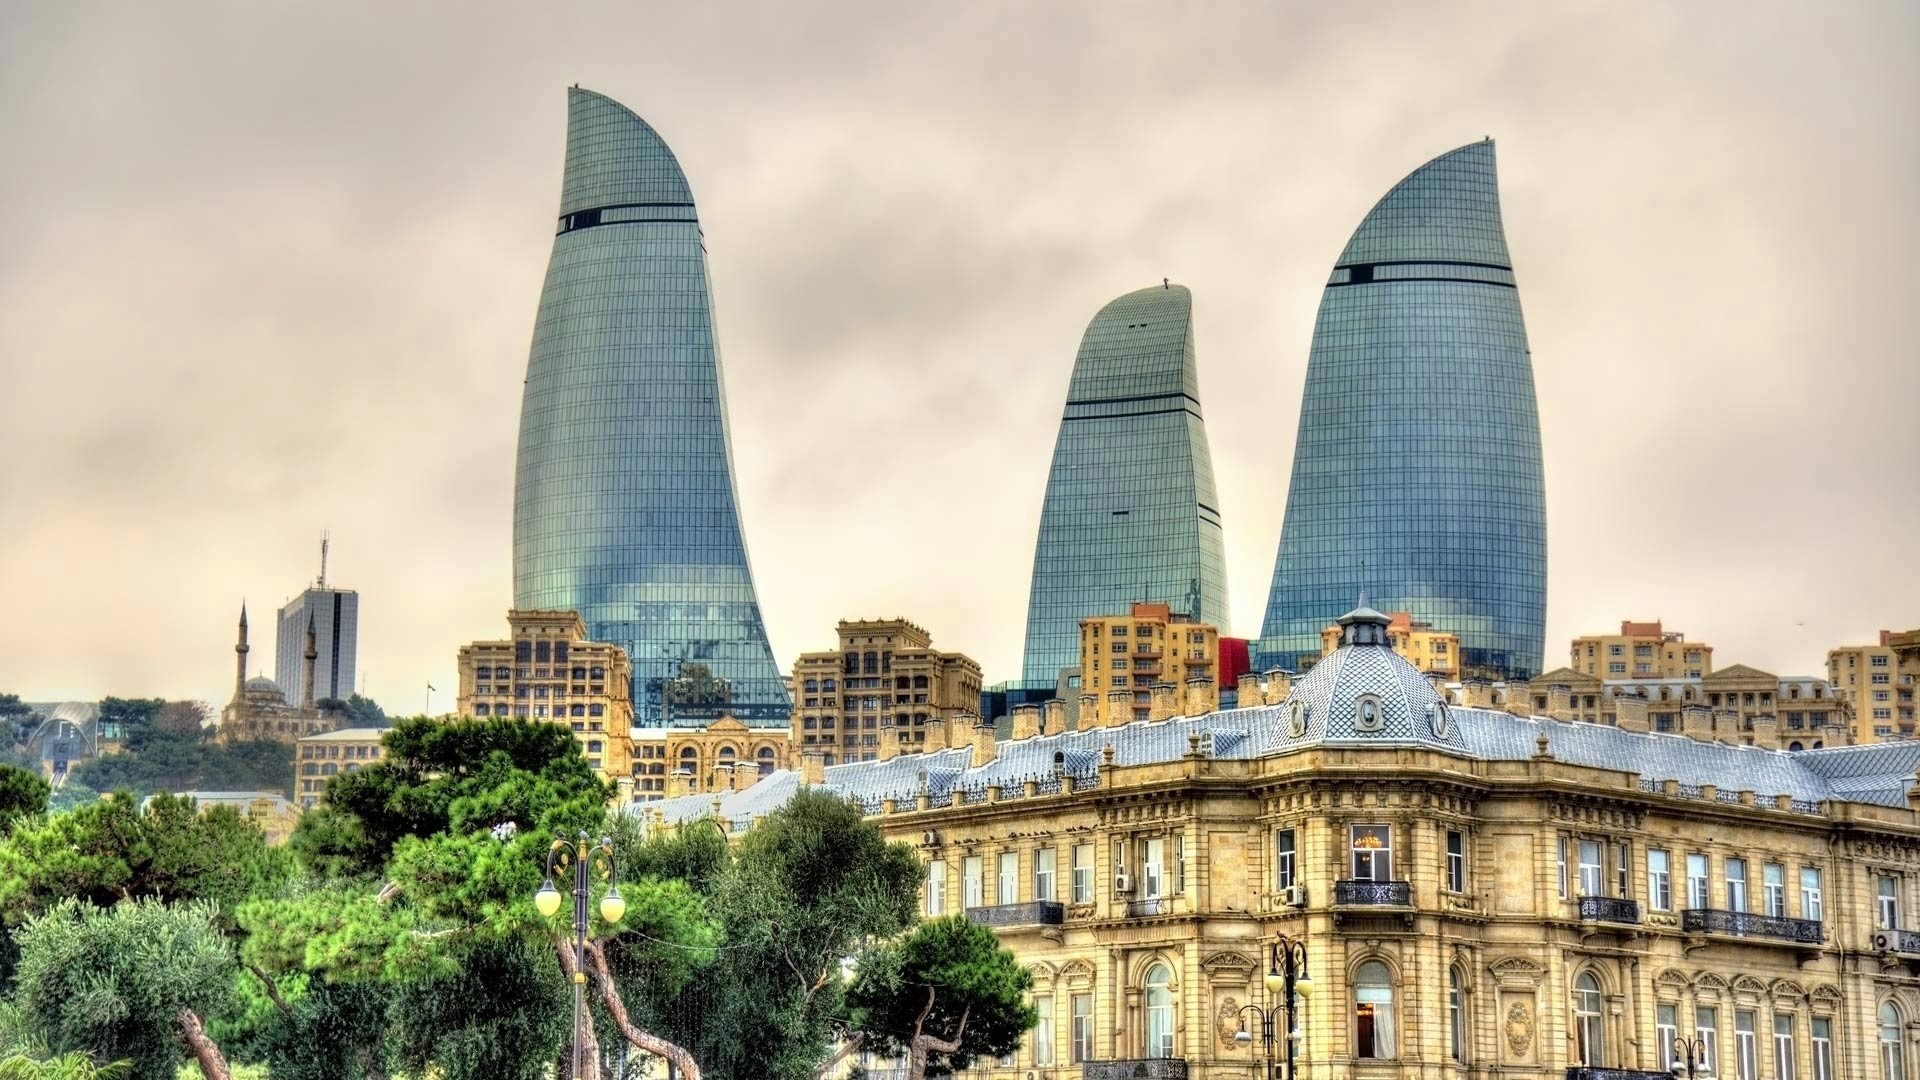 Azerbaijan: Baku, Skyscrapers, Flame Towers. 1920x1080 Full HD Wallpaper.